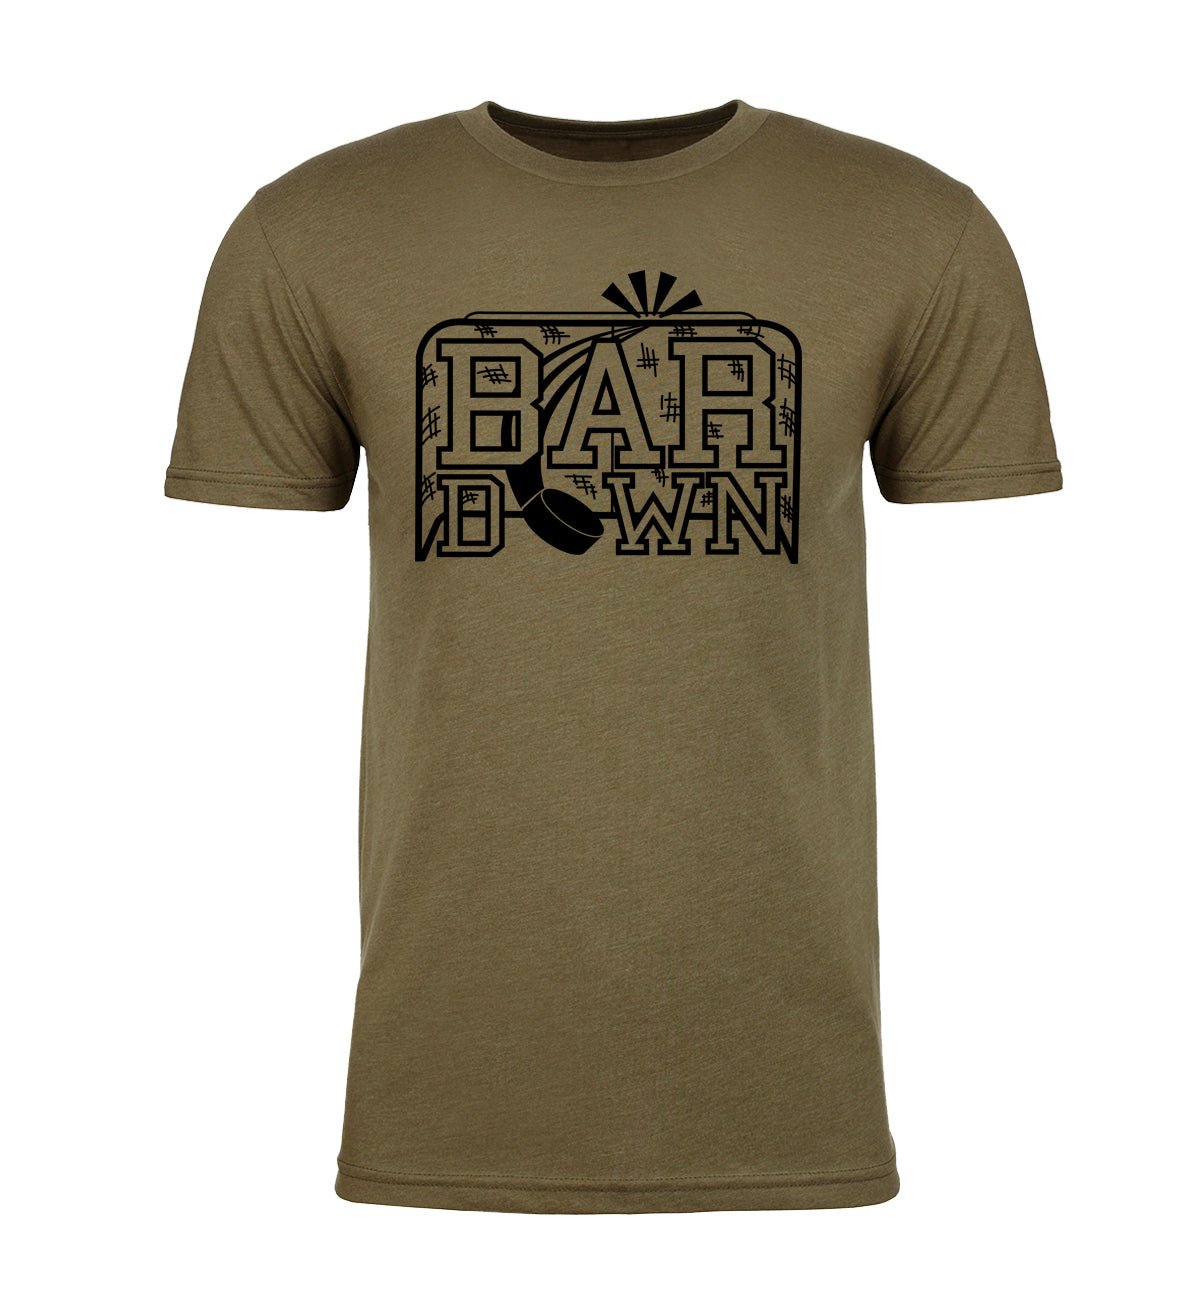 Shirt - Hockey Party T-shirts, Hockey Team T-shirts, Custom Hockey Party T-shirts For Players And Coaches - Bar Down